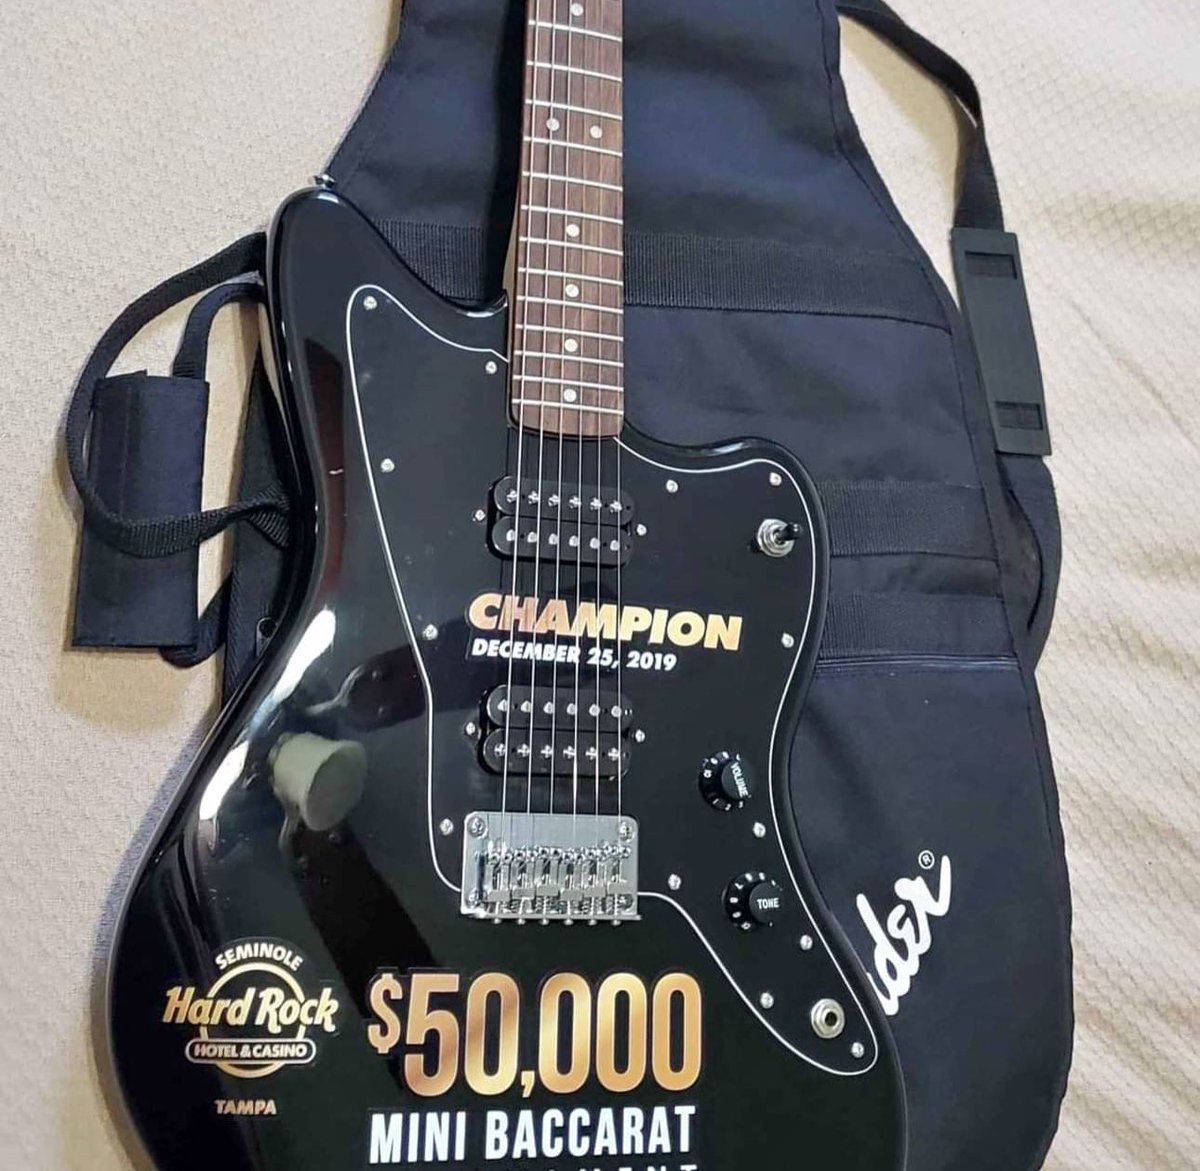 Should I cop the $50,000 Mini Baccarat Champion Jazzmaster?